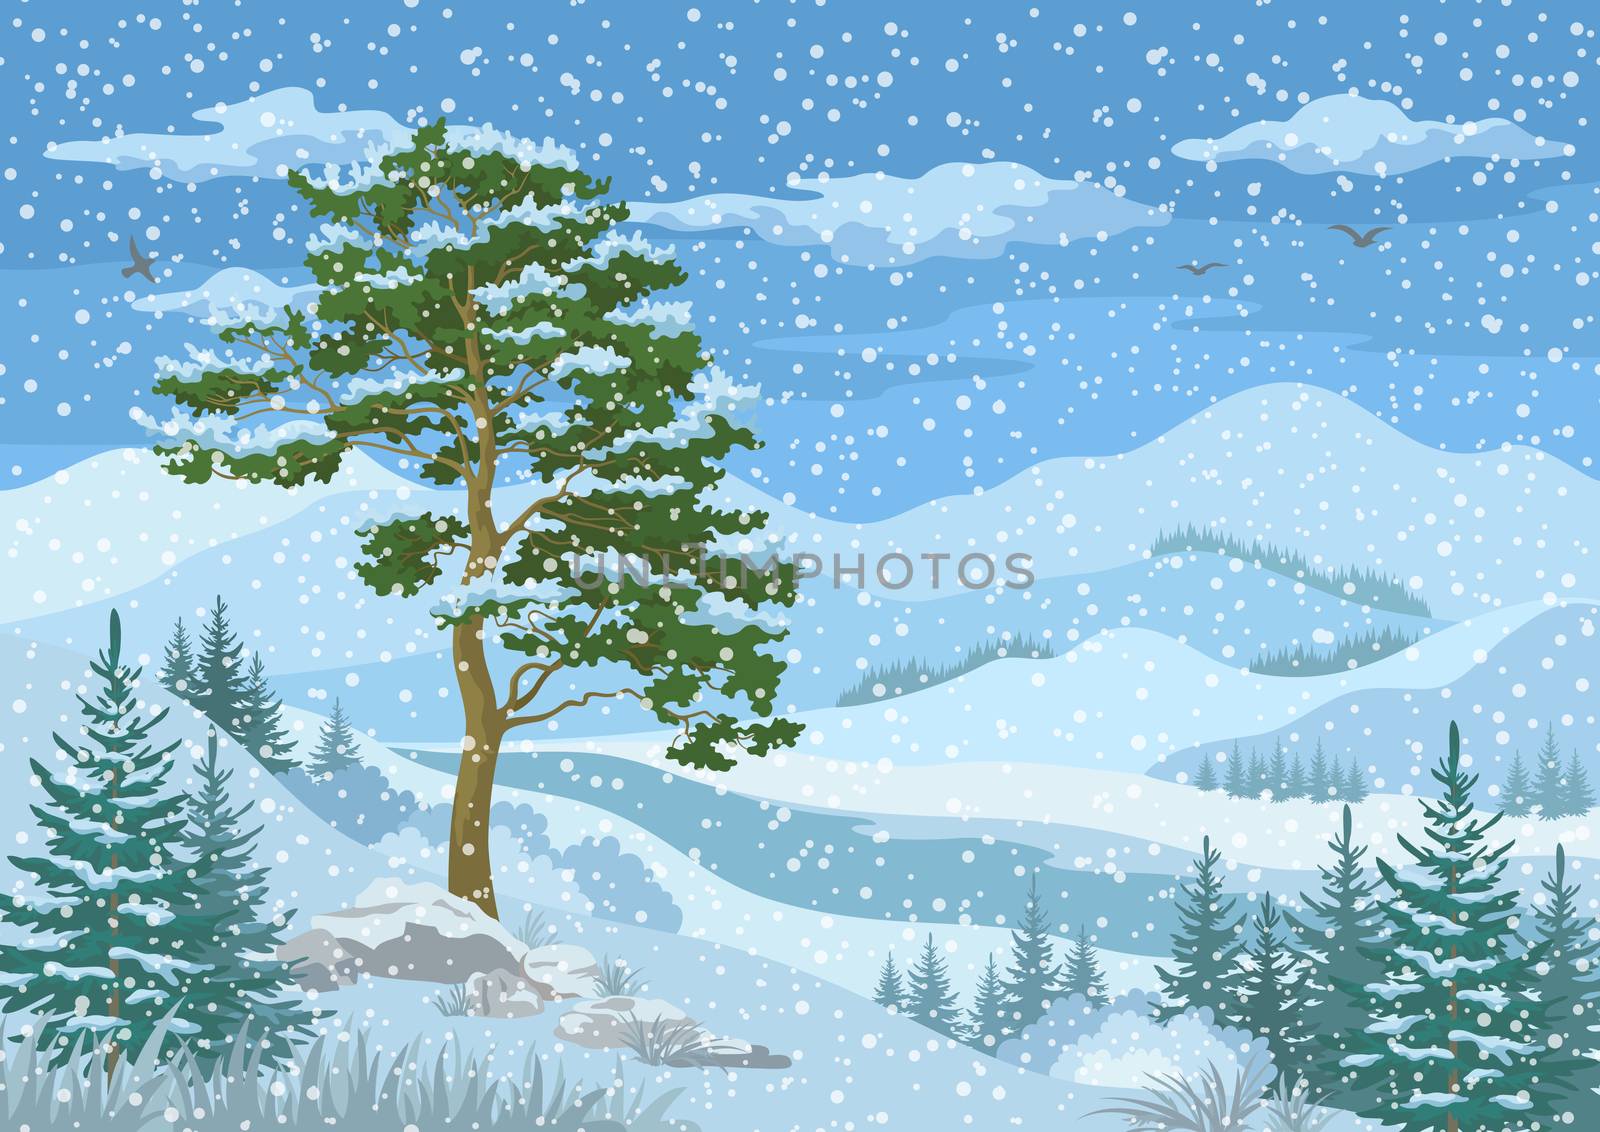 Mountain Winter Landscape by alexcoolok